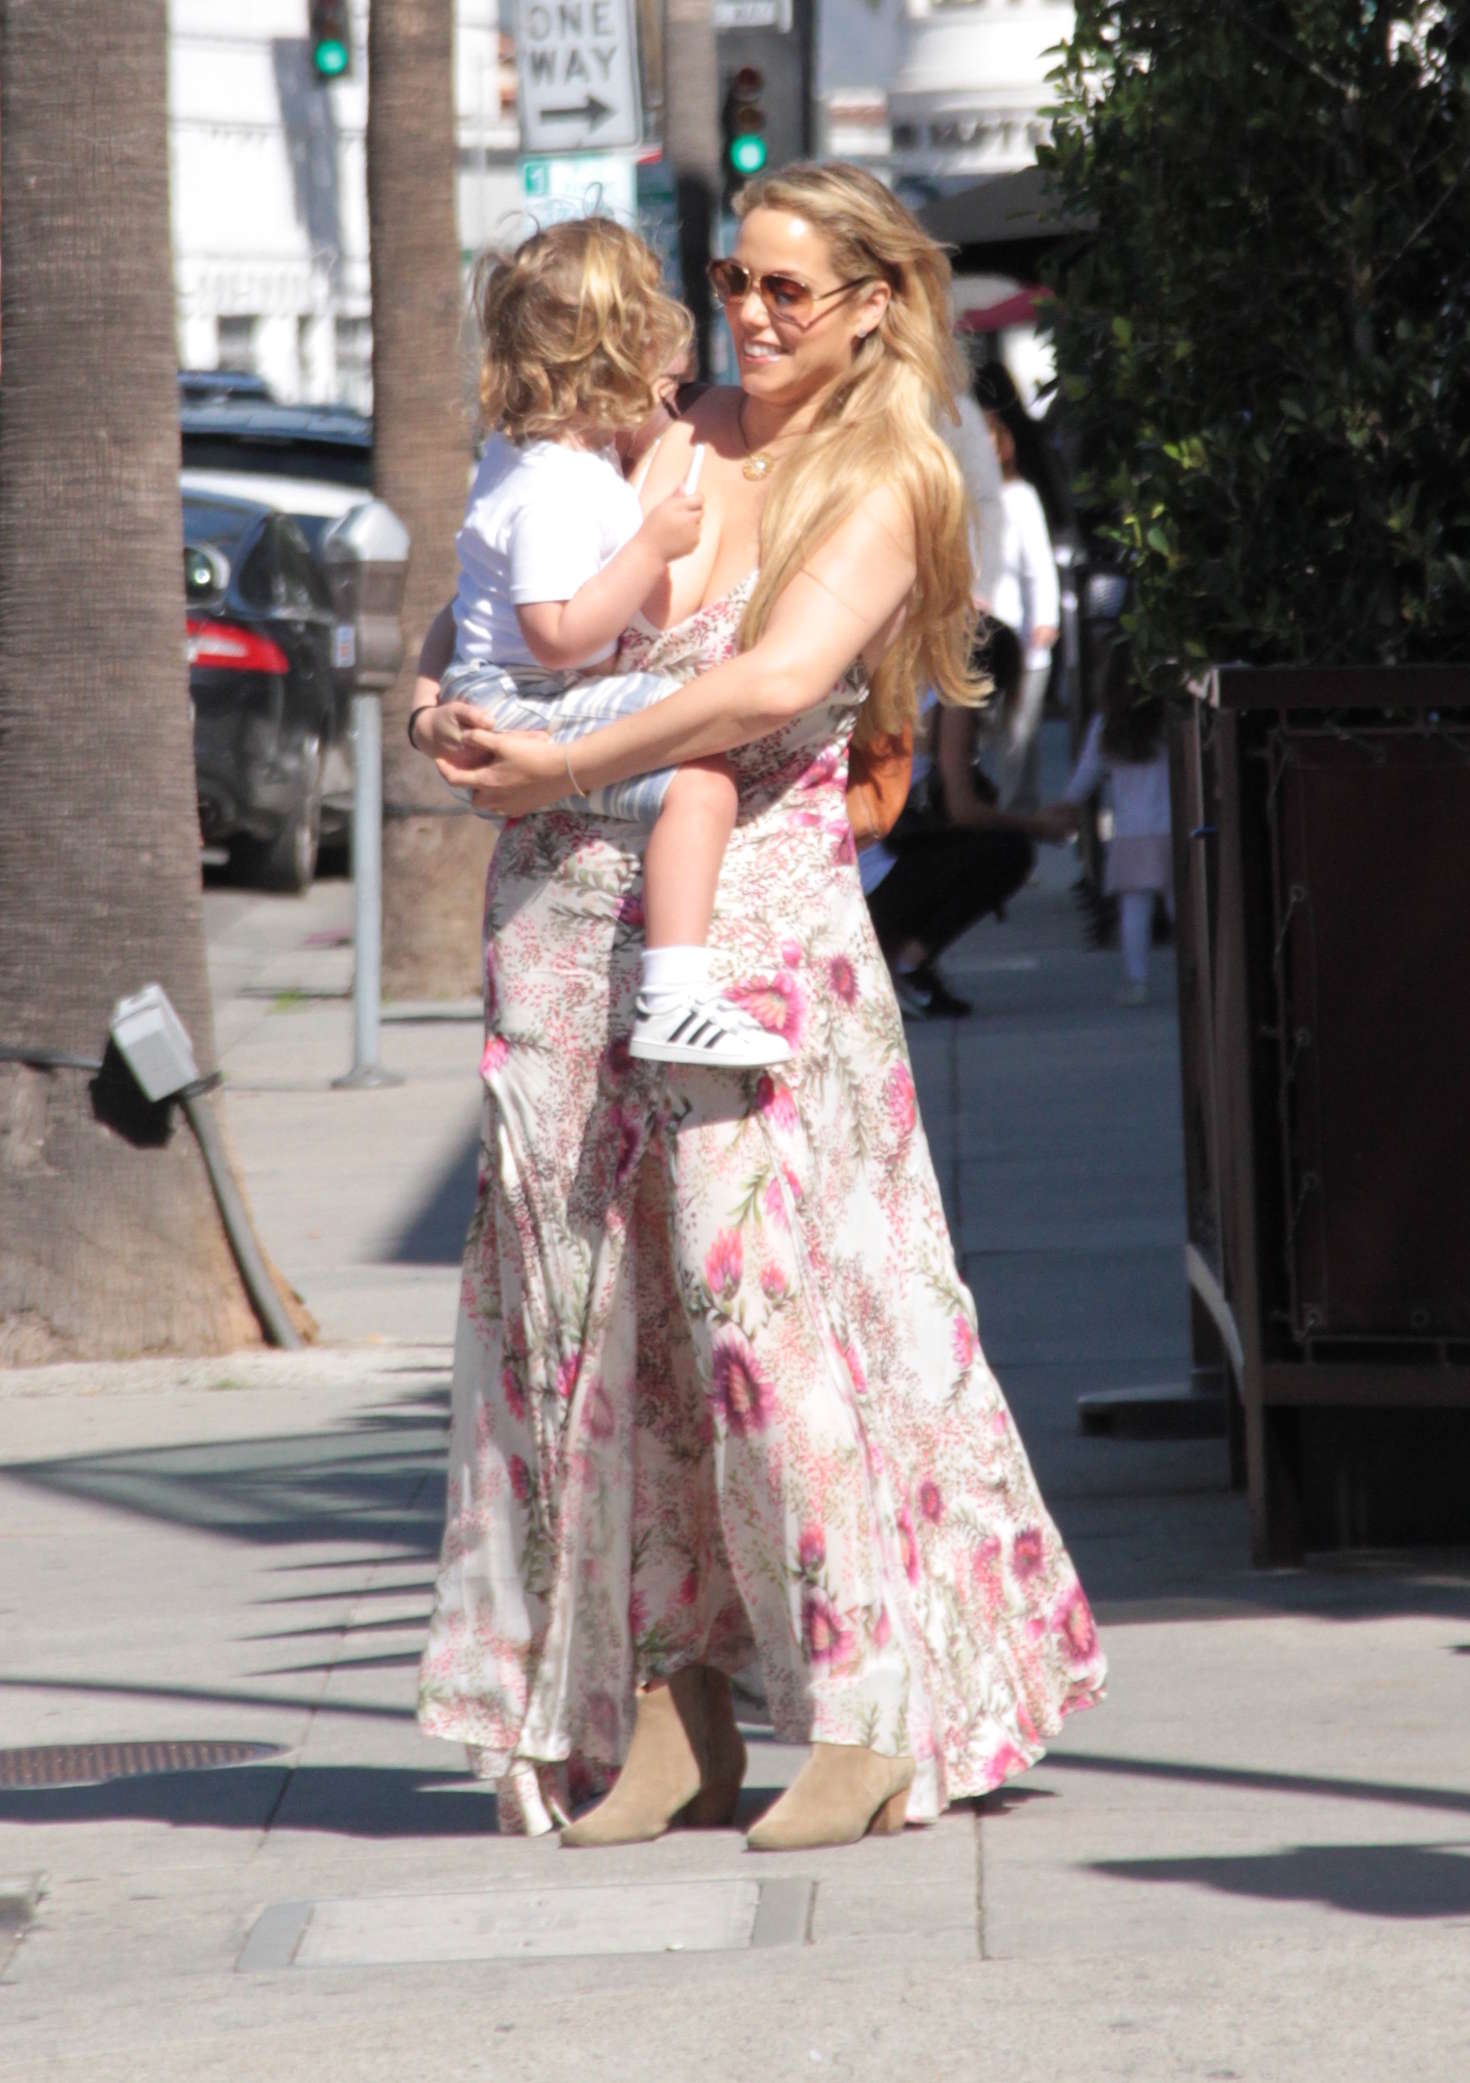 Elizabeth Berkley with her daughter shopping in Beverly Hills